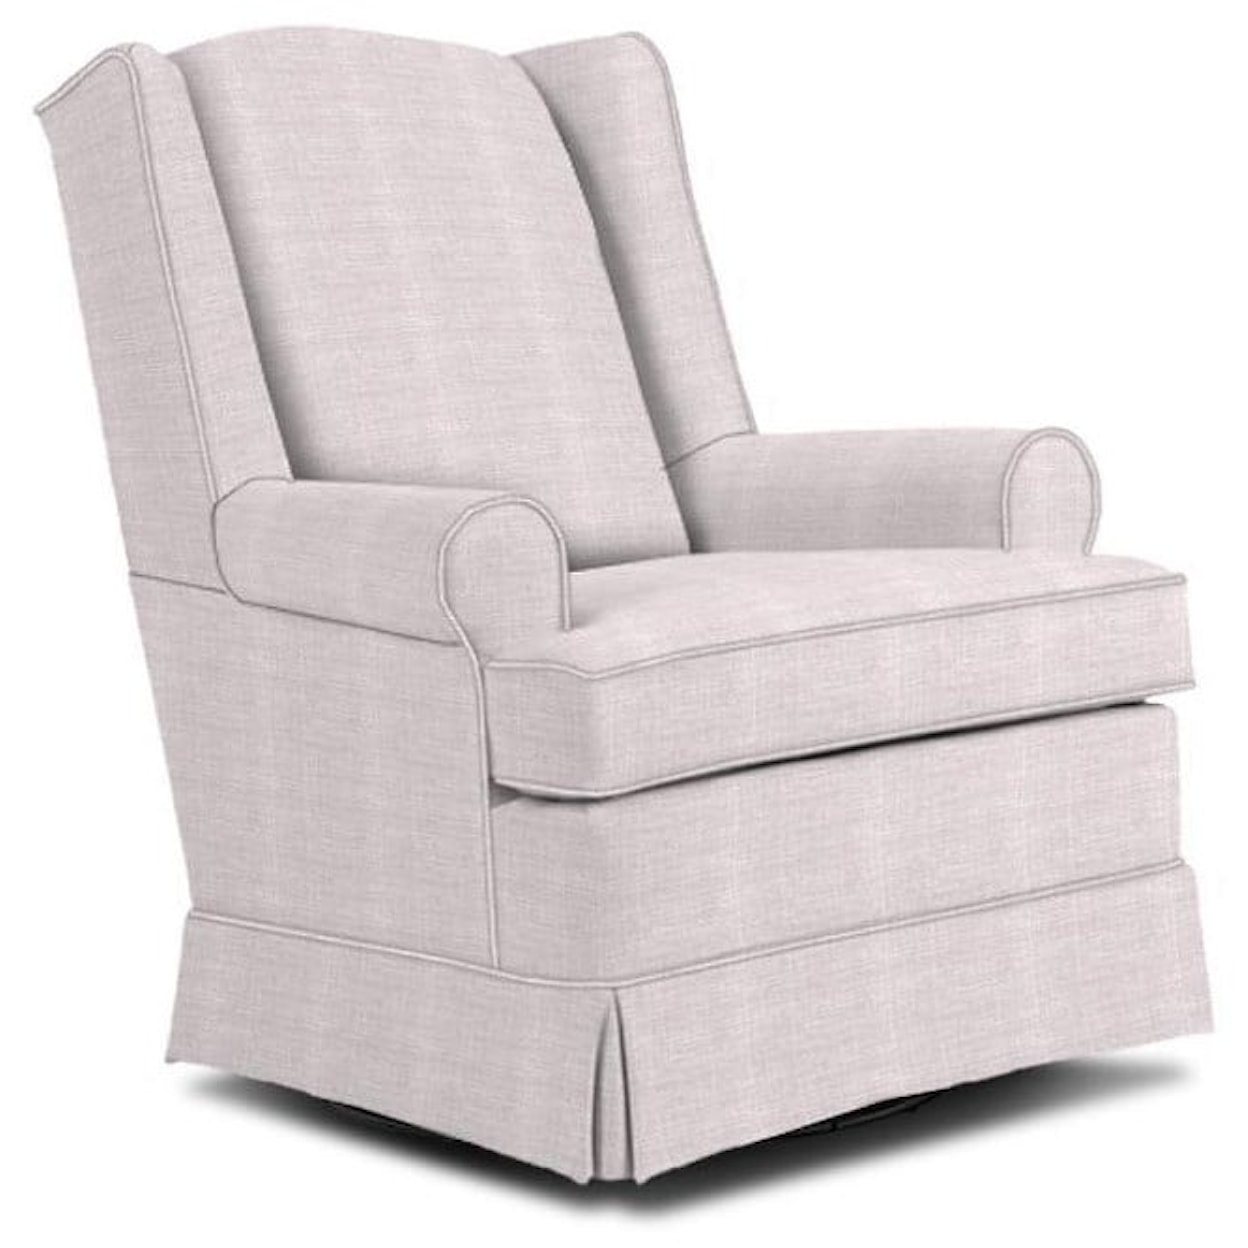 Best Home Furnishings Roni Swivel Glider Chair